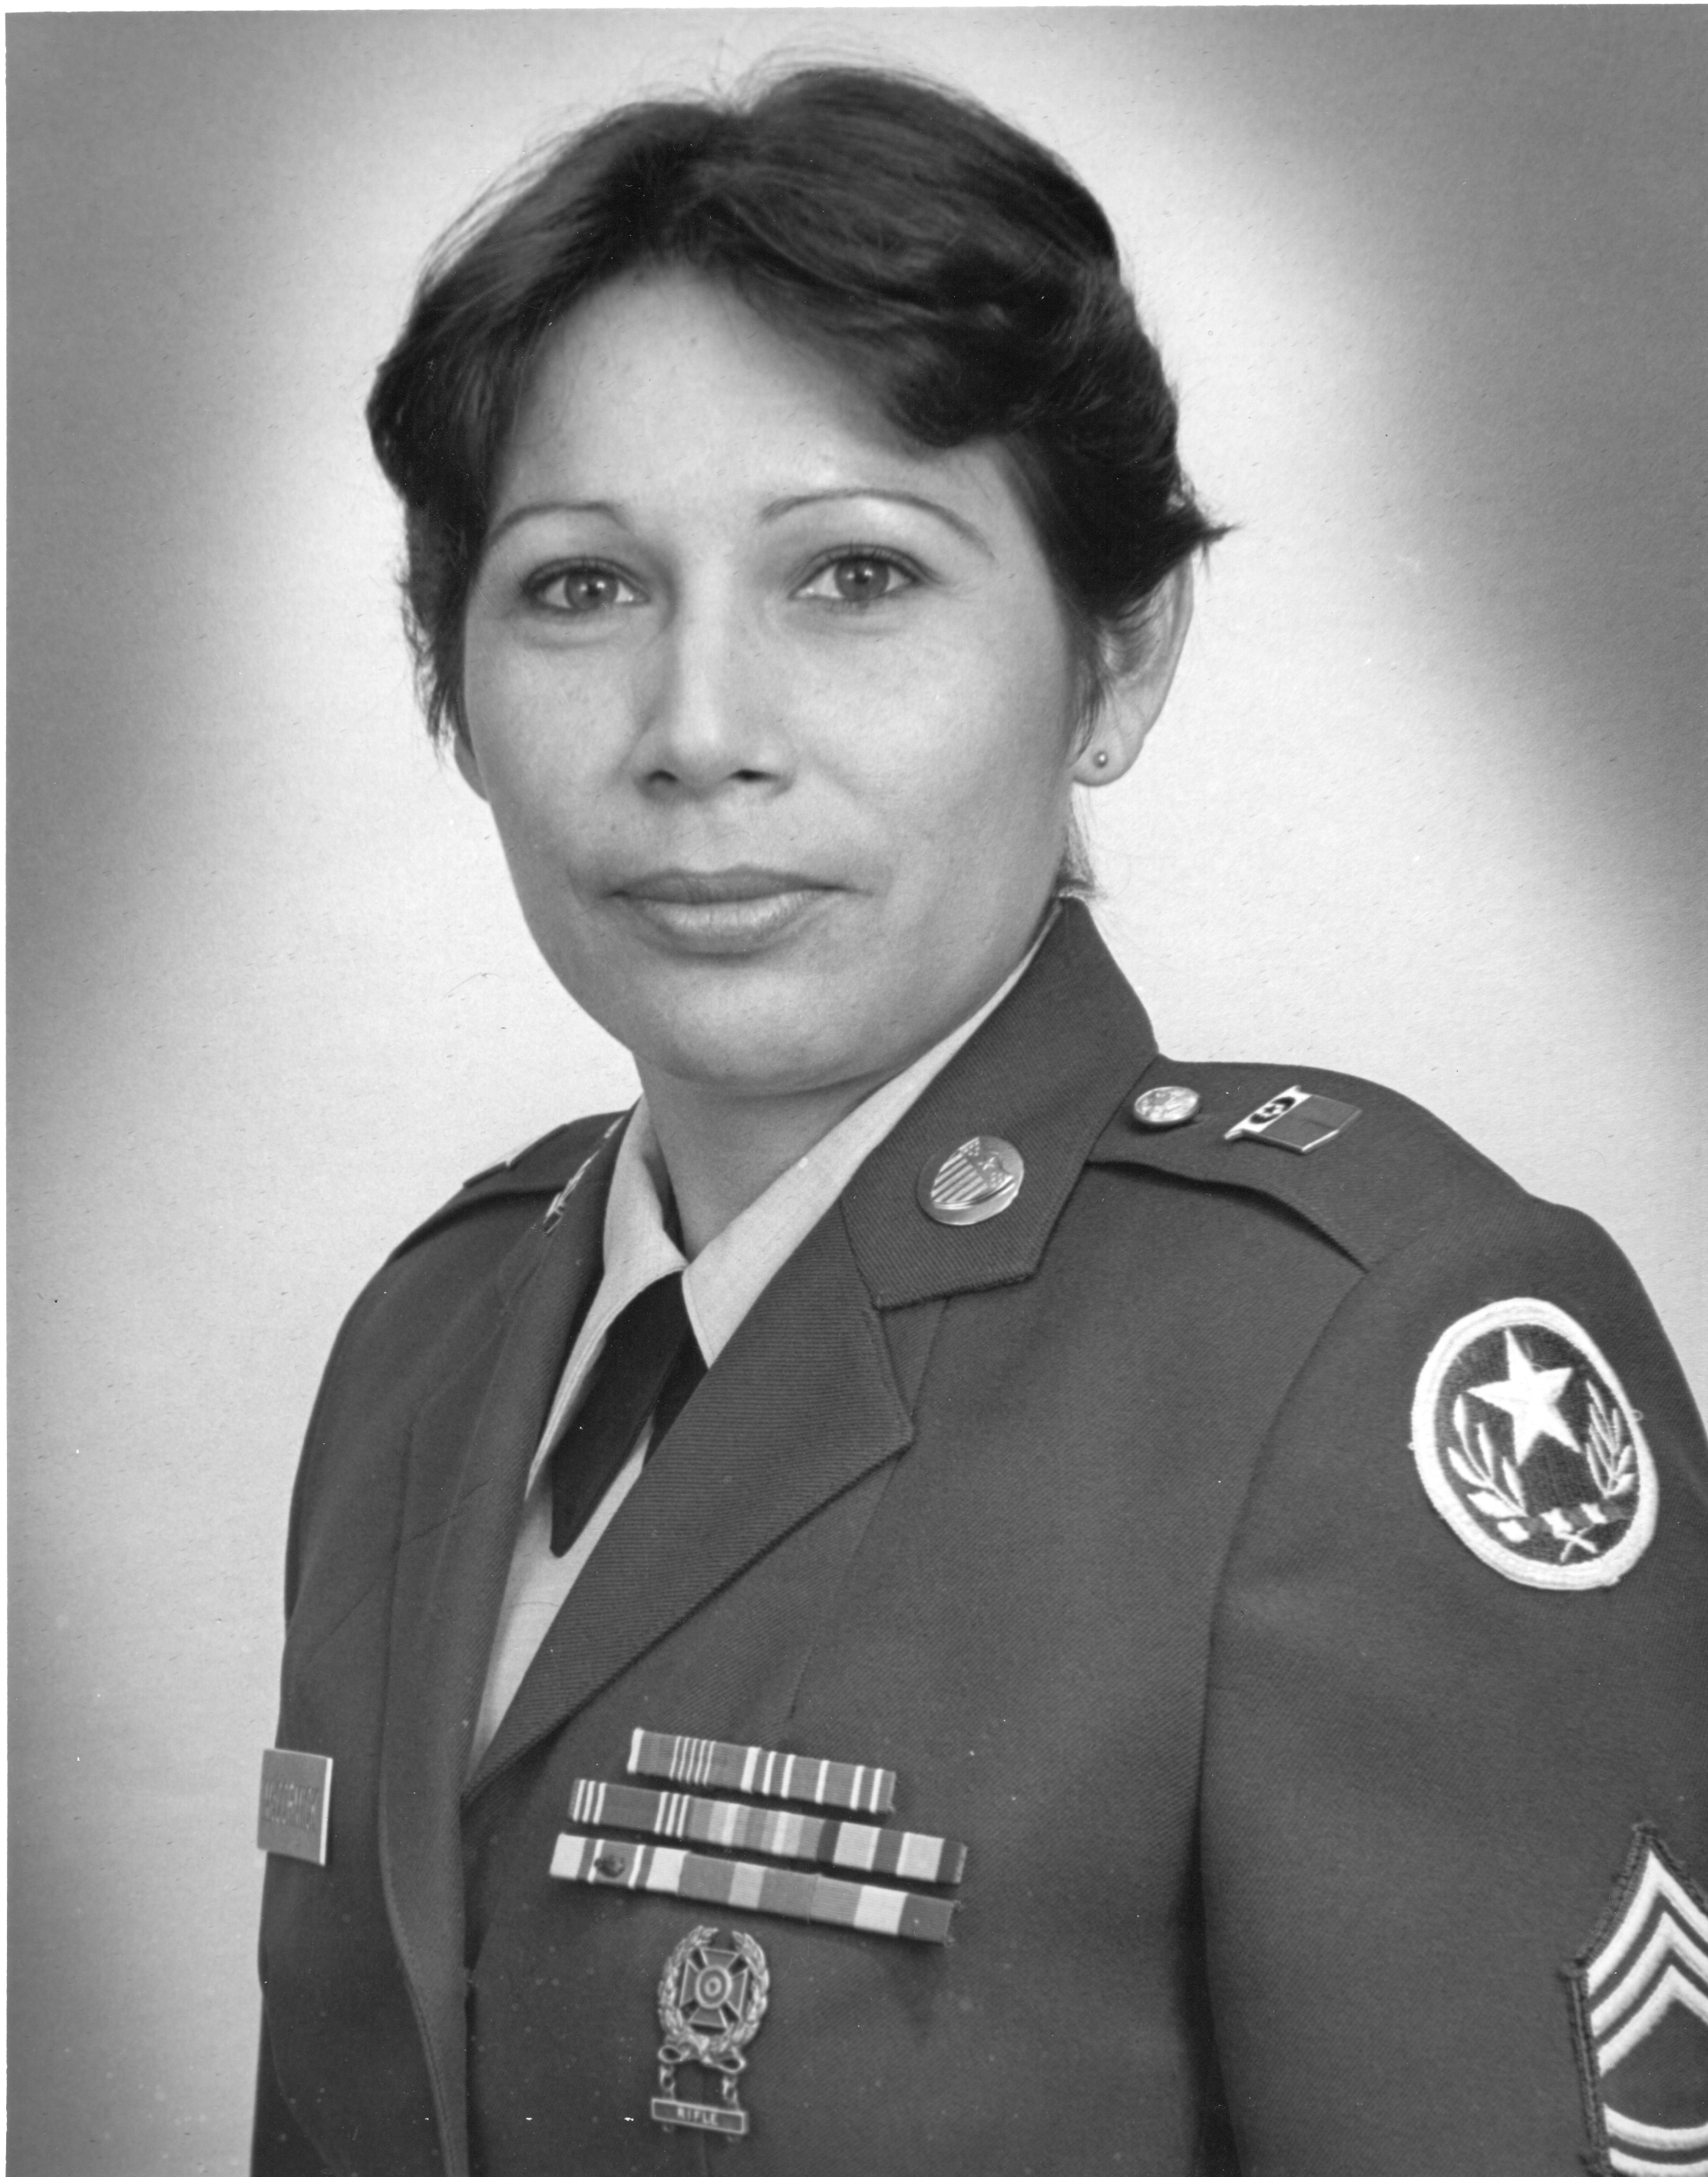 Command Sergeant Major Margaret "Maggie" McCormick